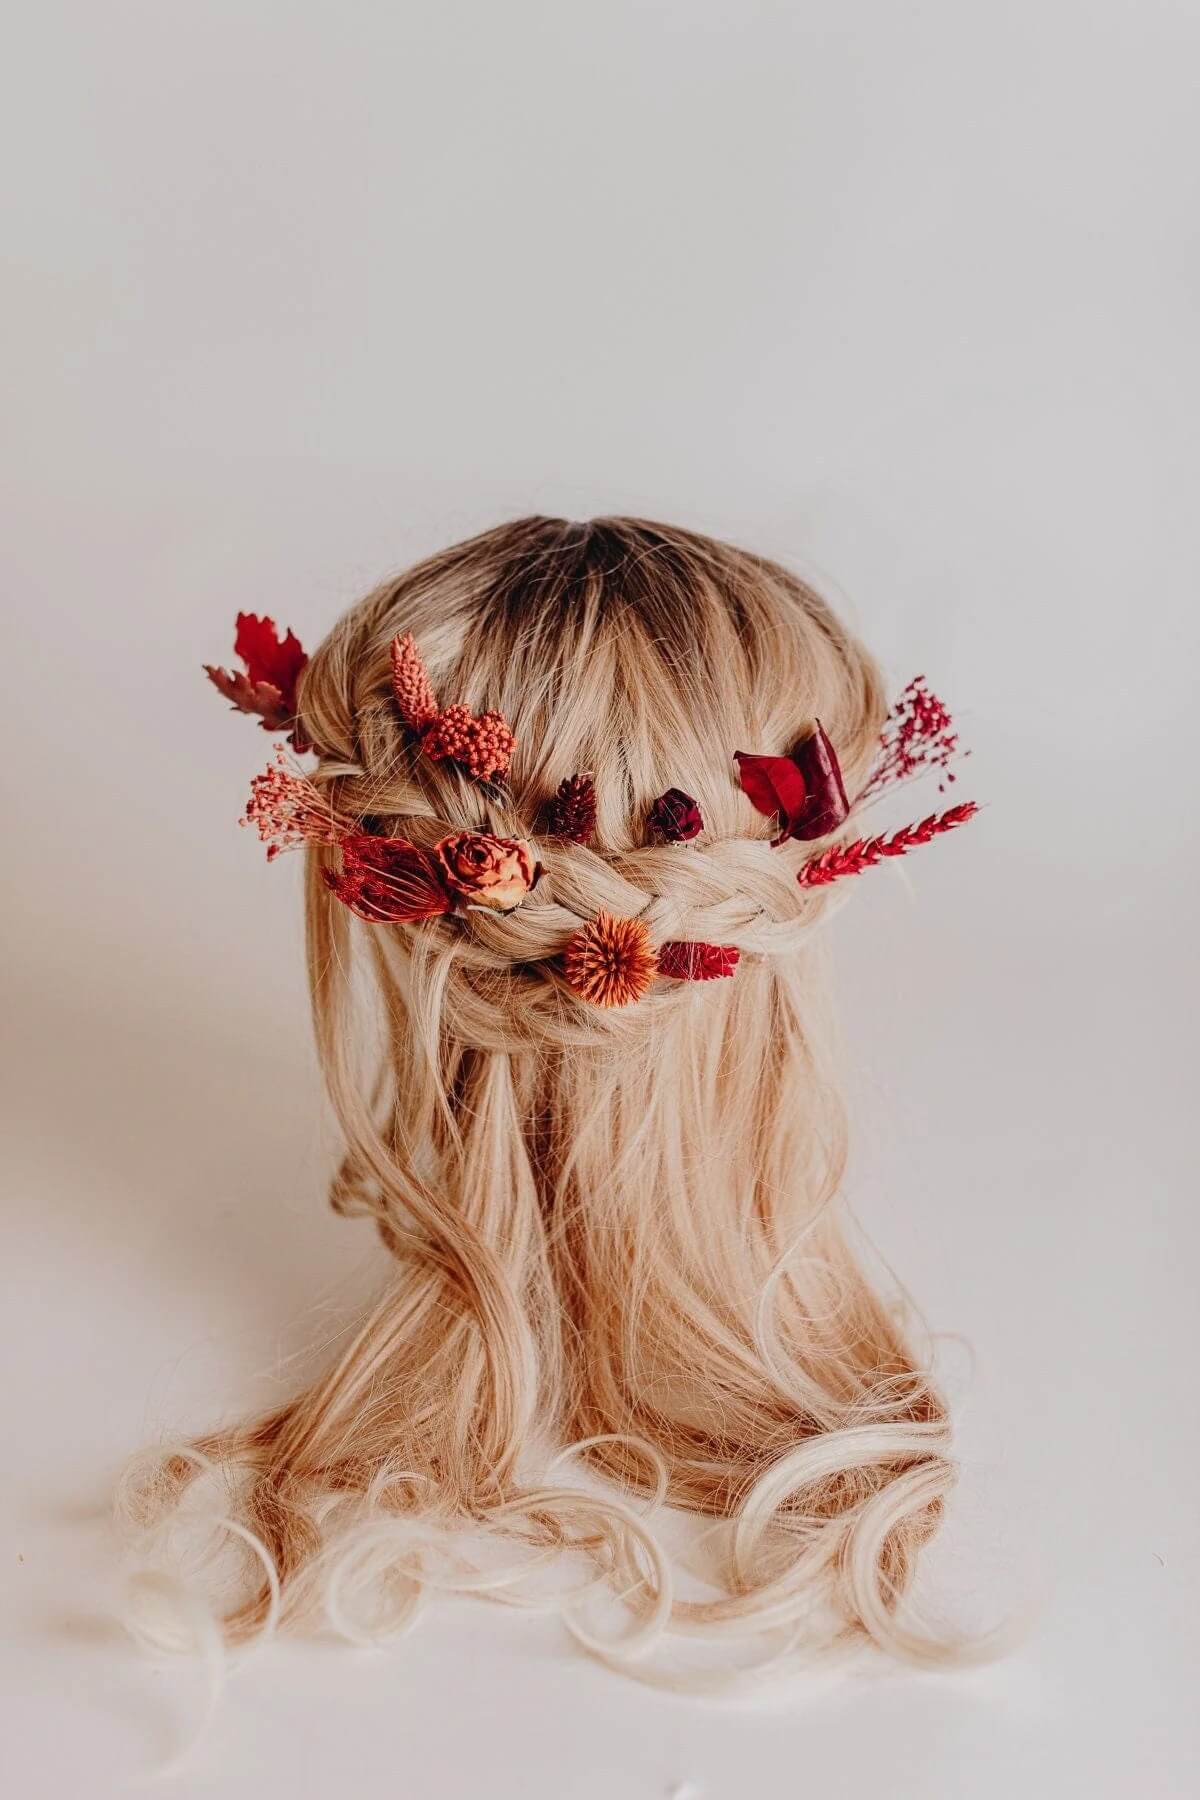 Hidden Botanics’ bohemian braided hair crown with red and orange wildflowers.